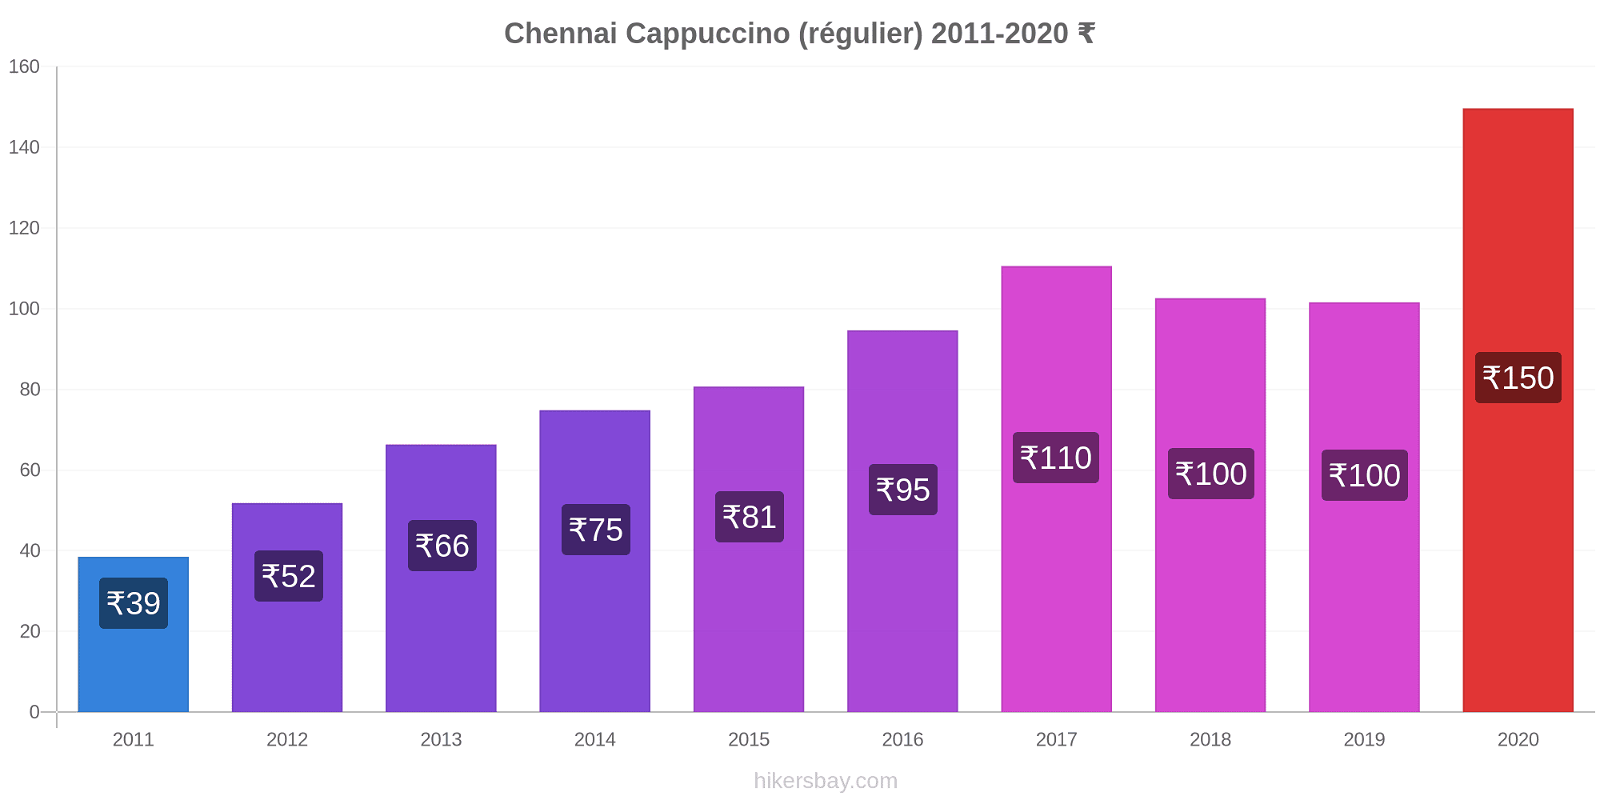 Chennai changements de prix Cappuccino (régulier) hikersbay.com